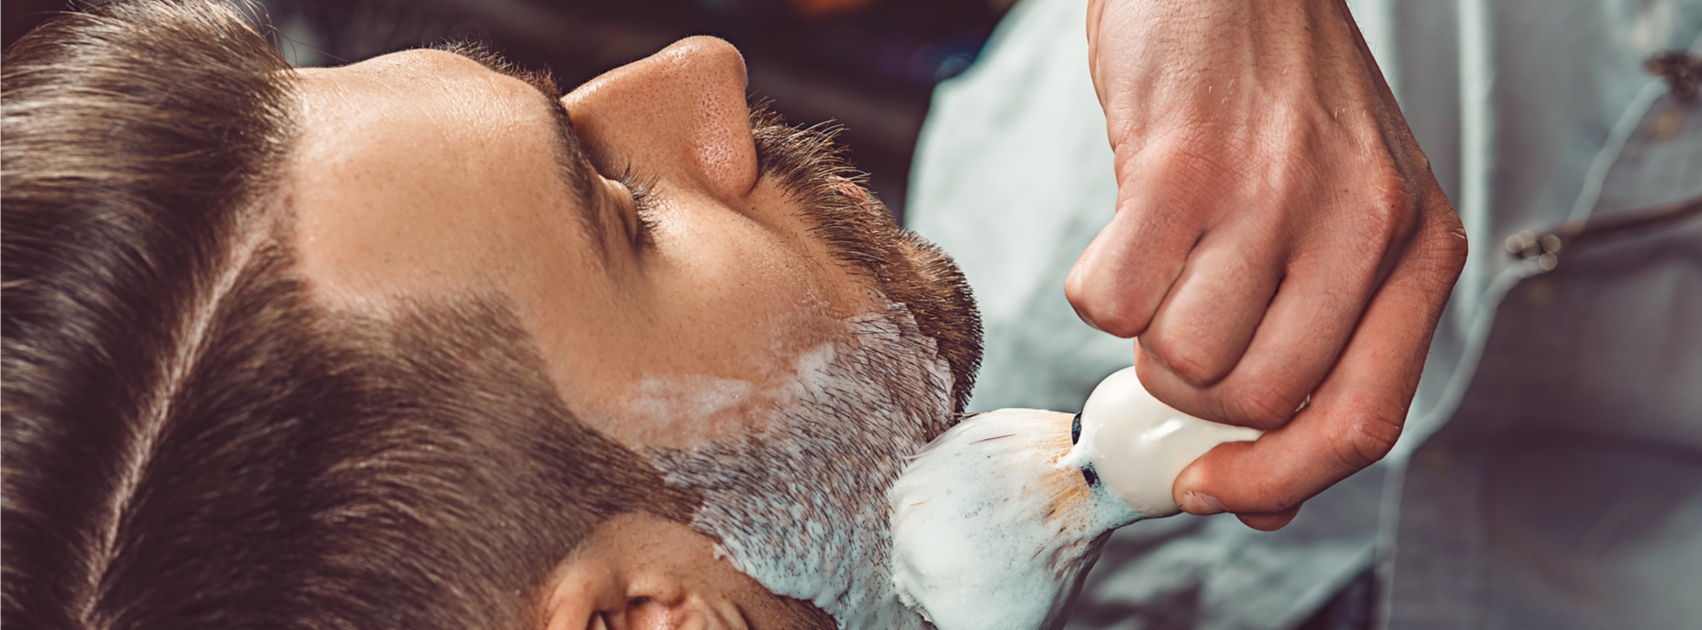 man applying shaving cream to customer